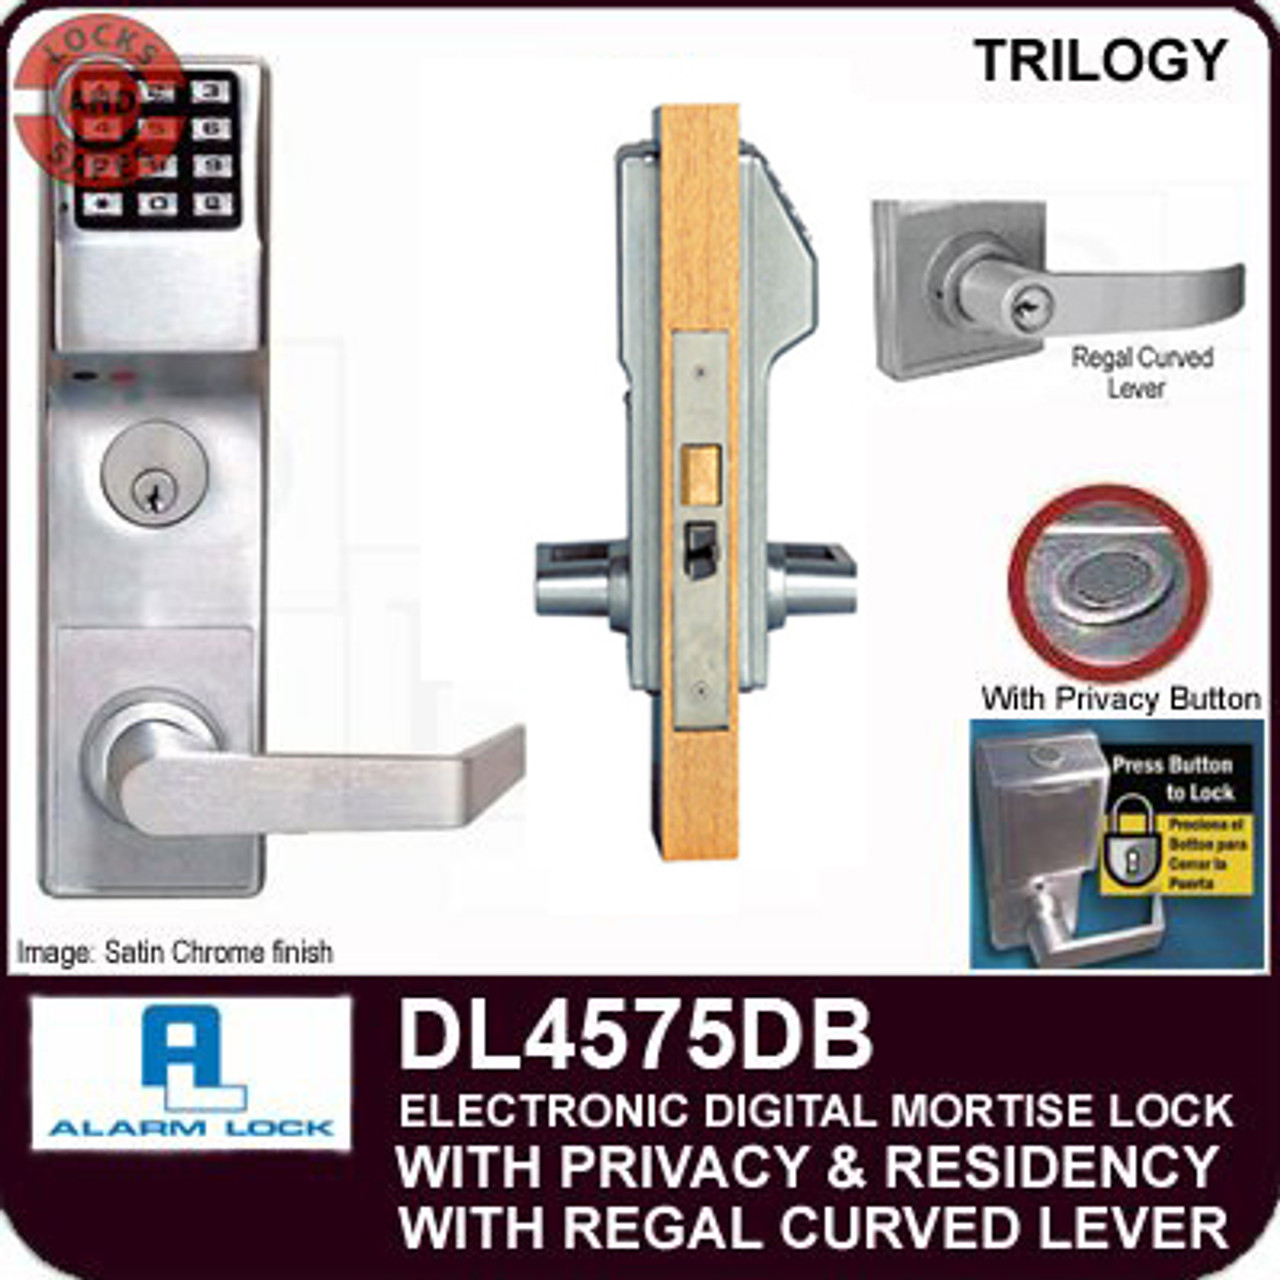 Alarm Lock Trilogy DL4575DB ELECTRONIC MORTISE LOCKS